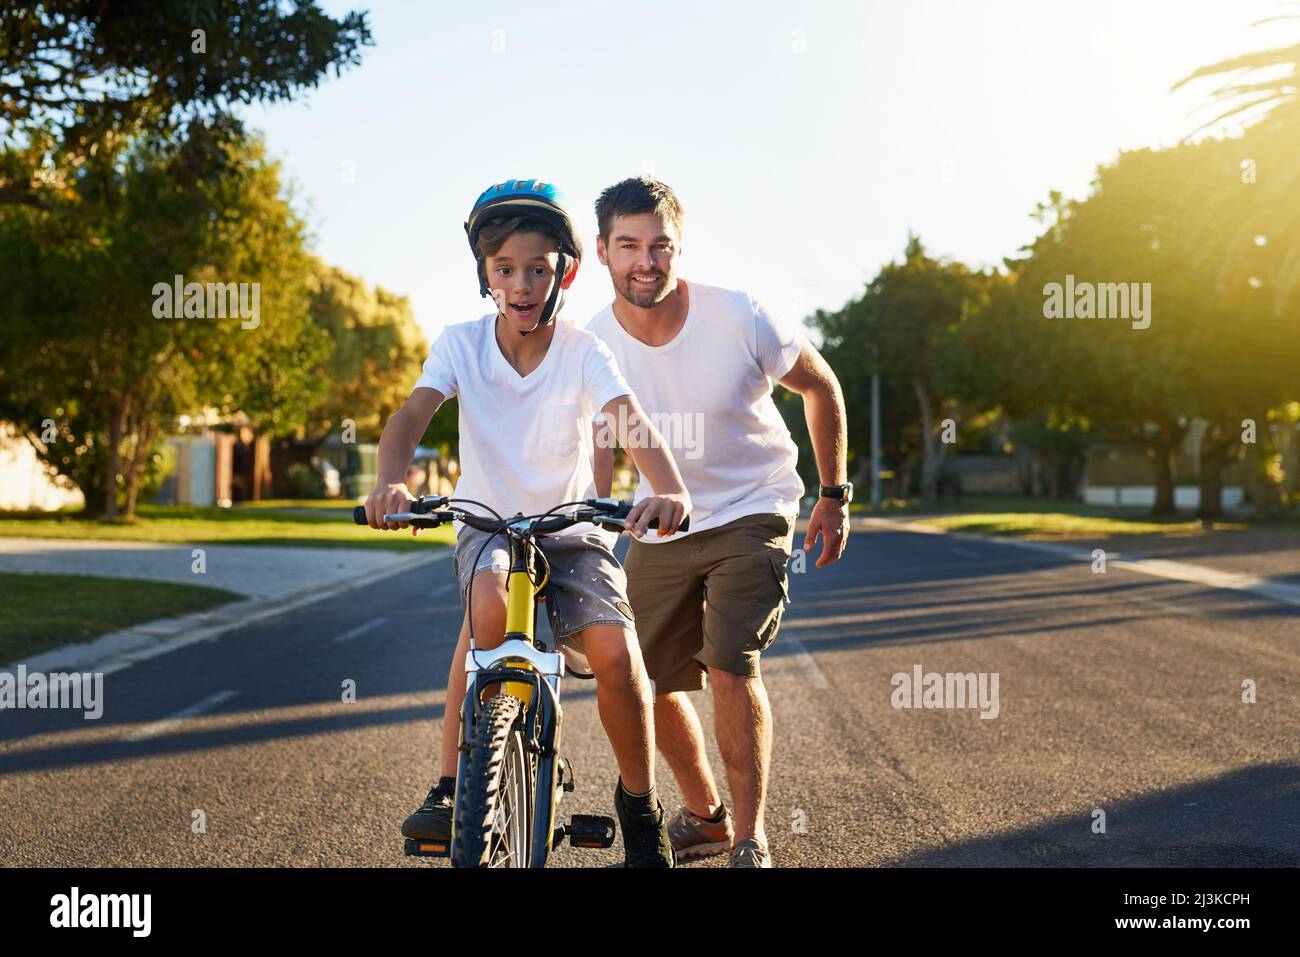 Cycling through his block. Shot of a young boy riding his bicycle through his neighbourhood. Stock Photo